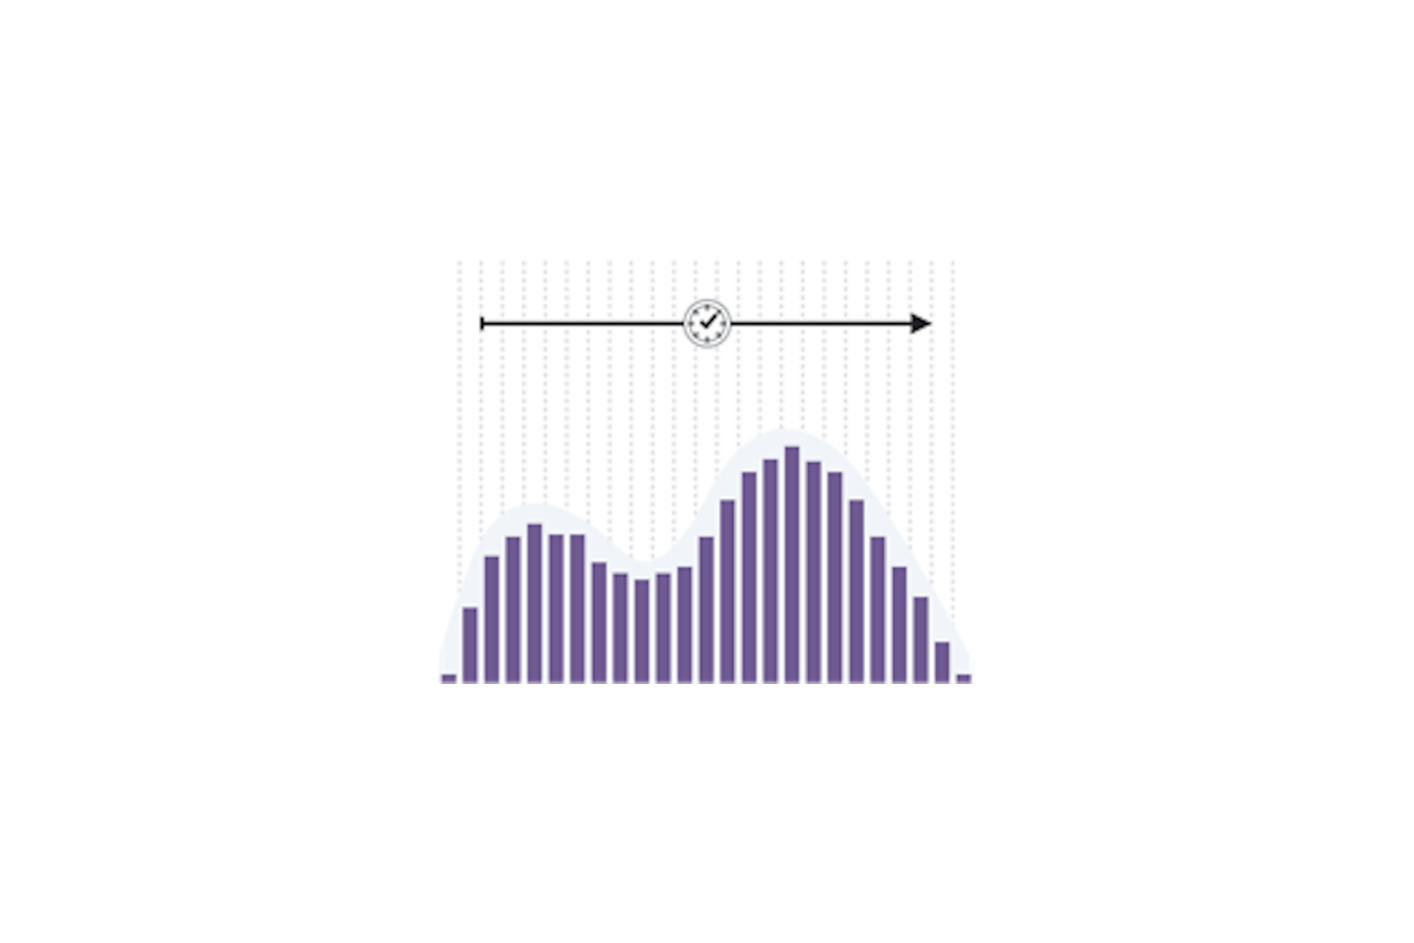 A graph of High-Resolution Audio at 24 bit/96 kHz